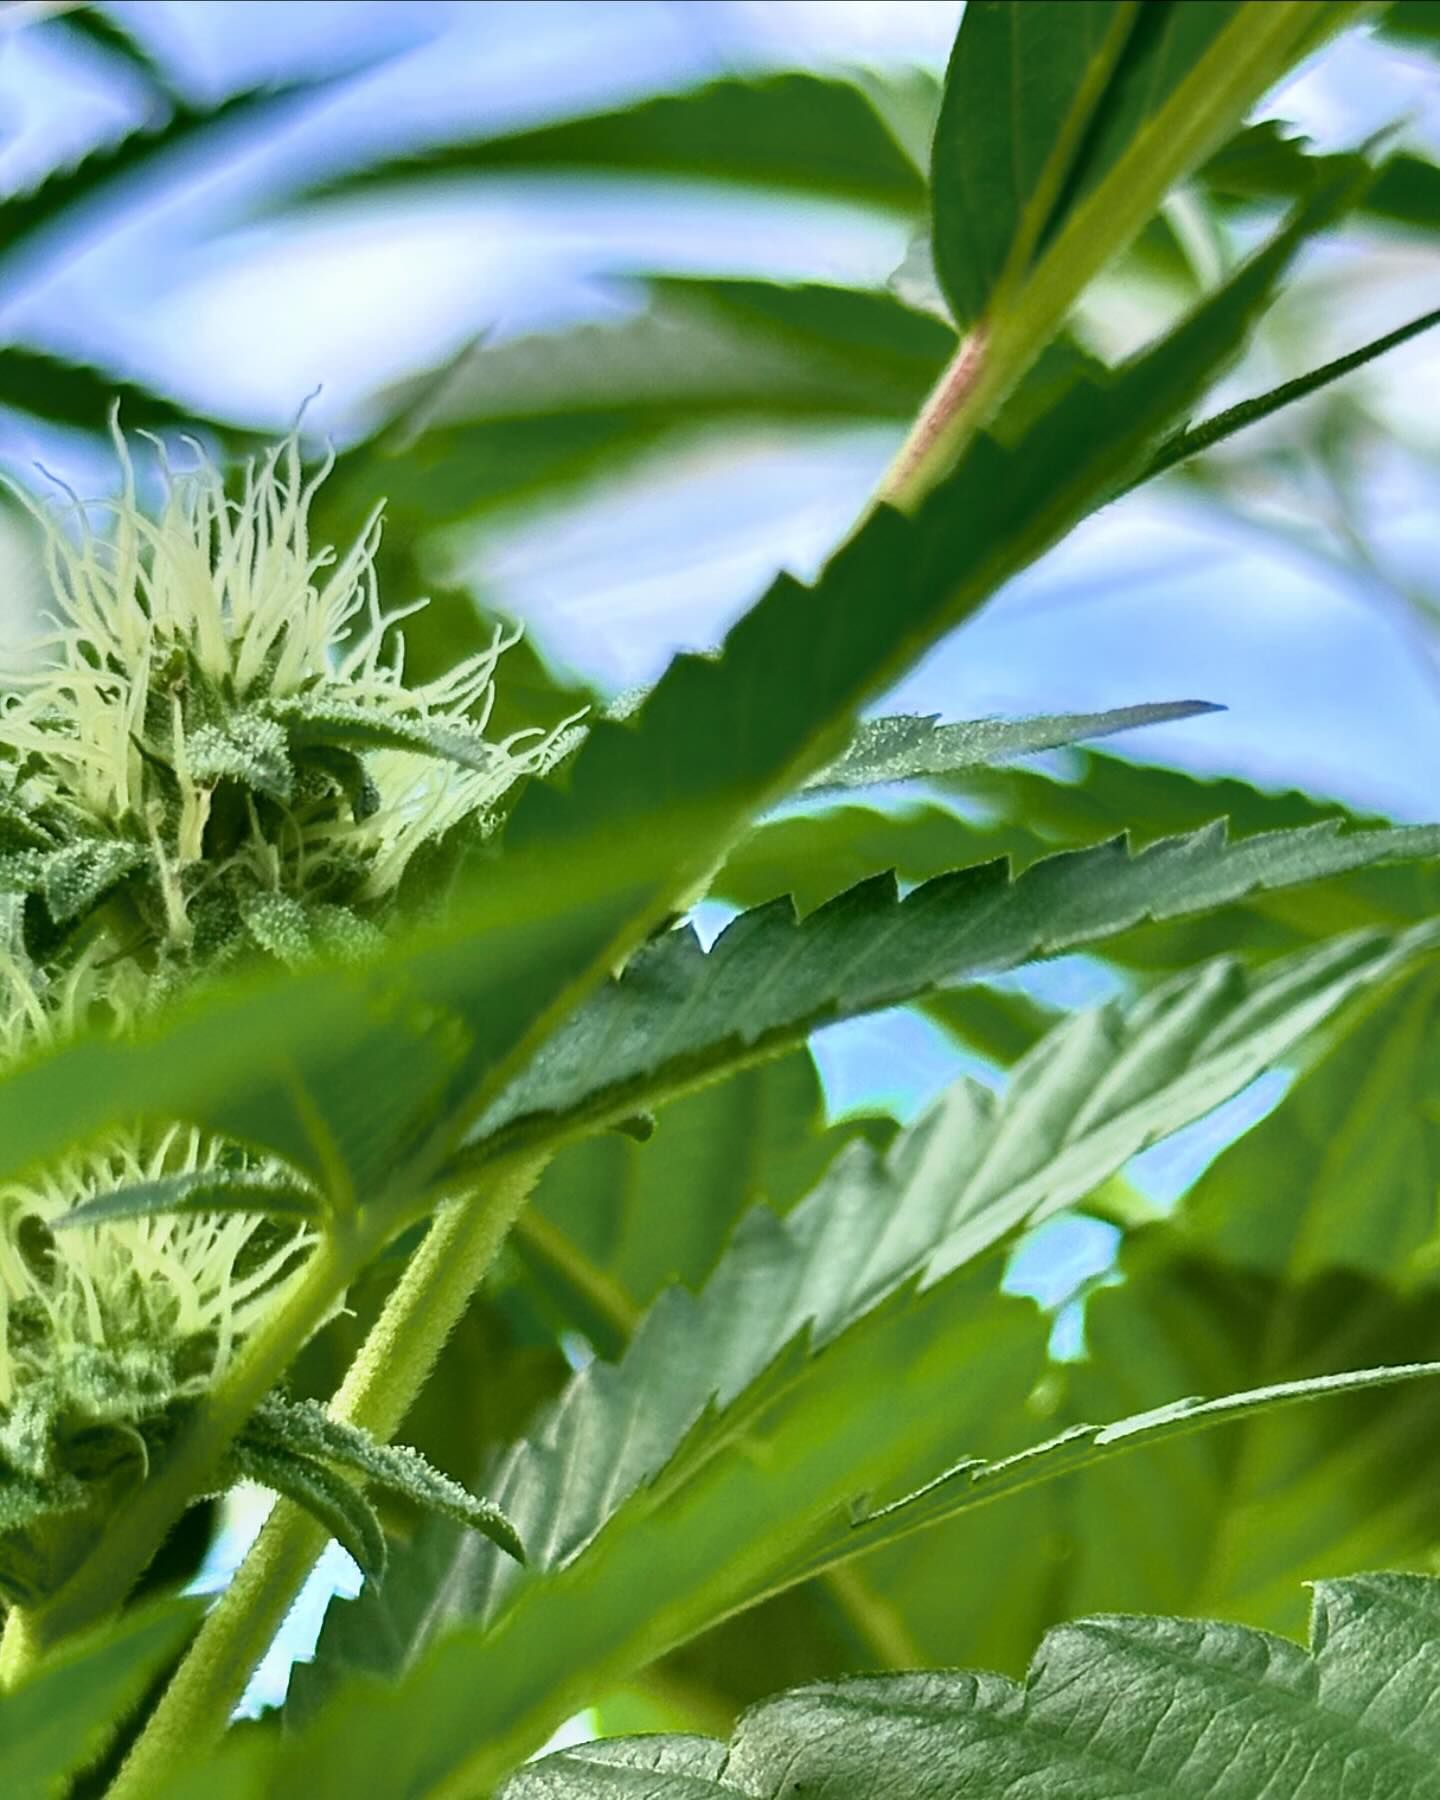 Where to grow cannabis